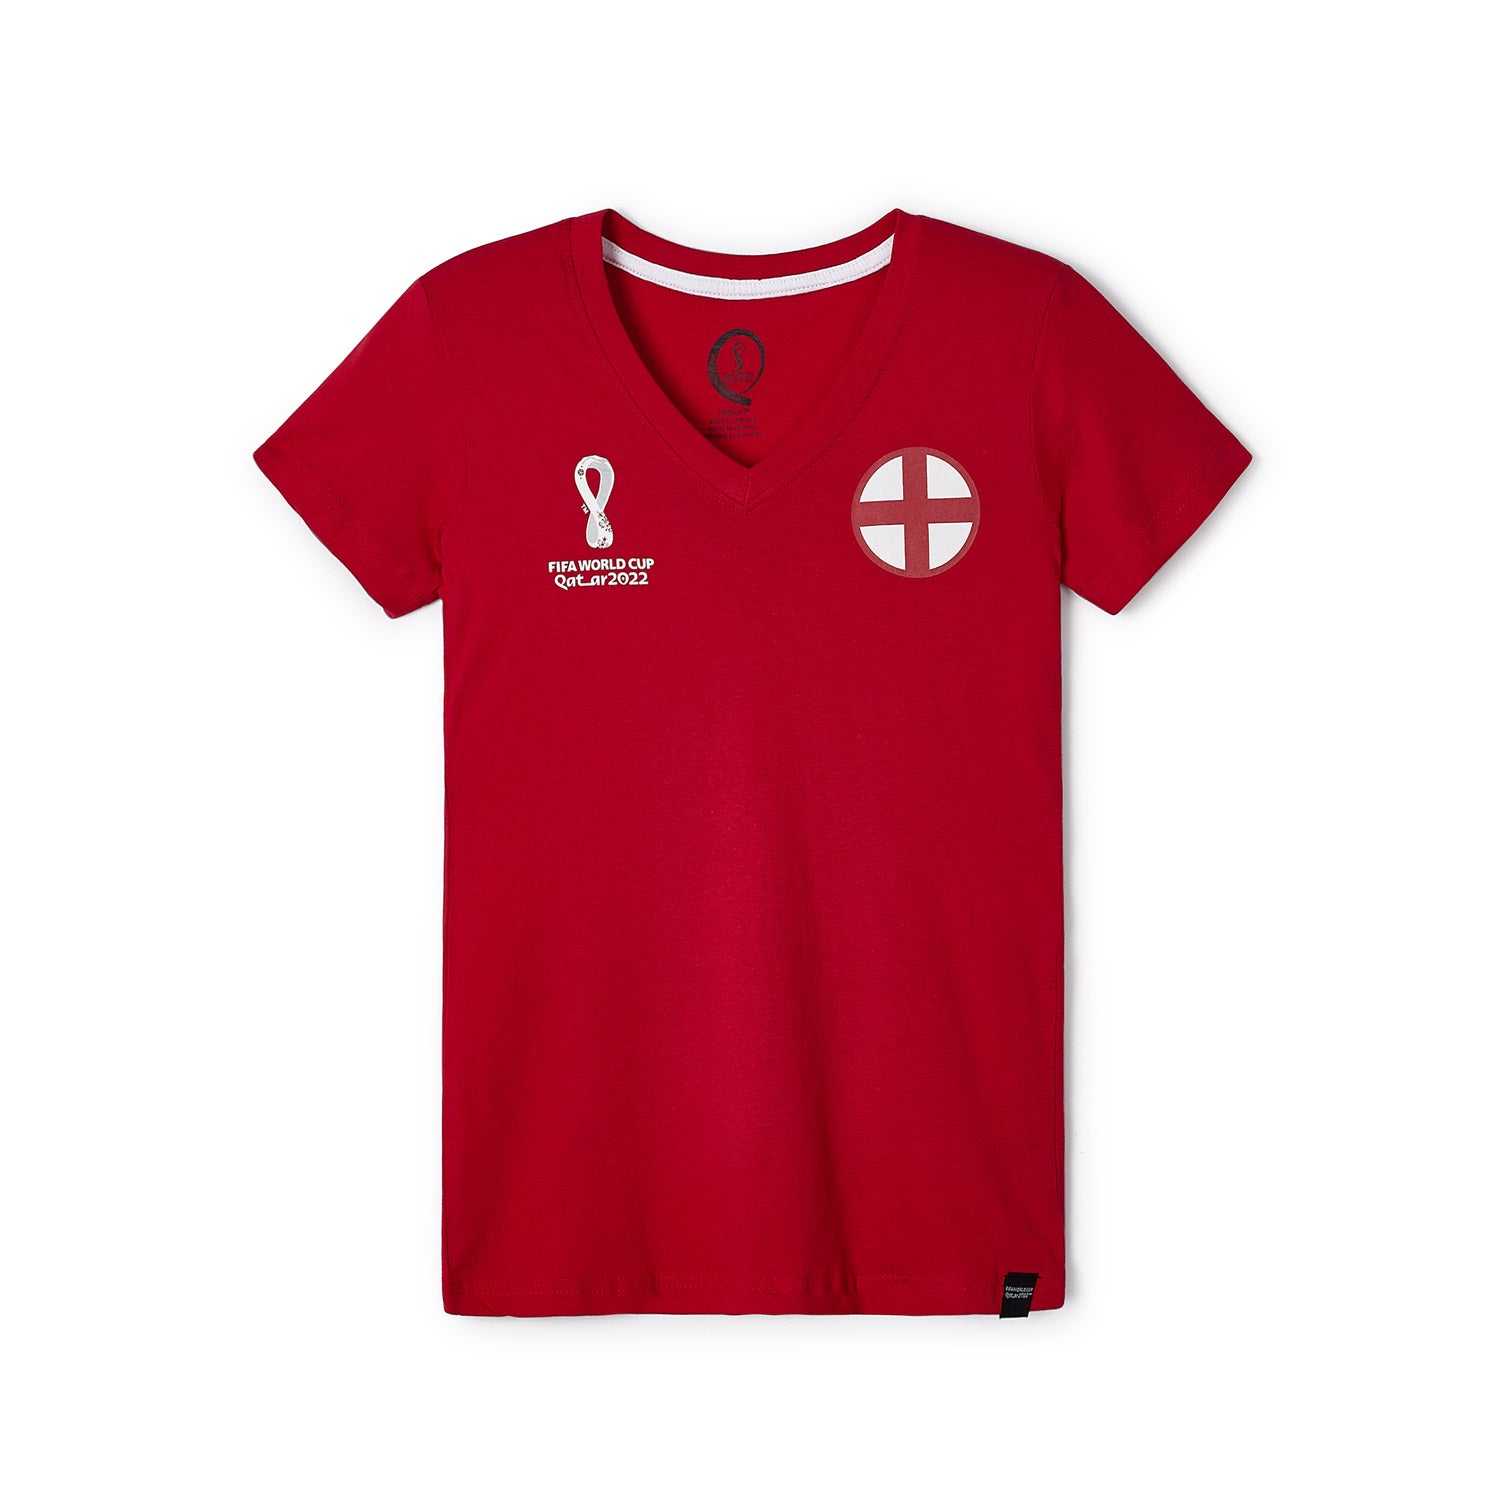 2022 World Cup England Red T-Shirt - Women's